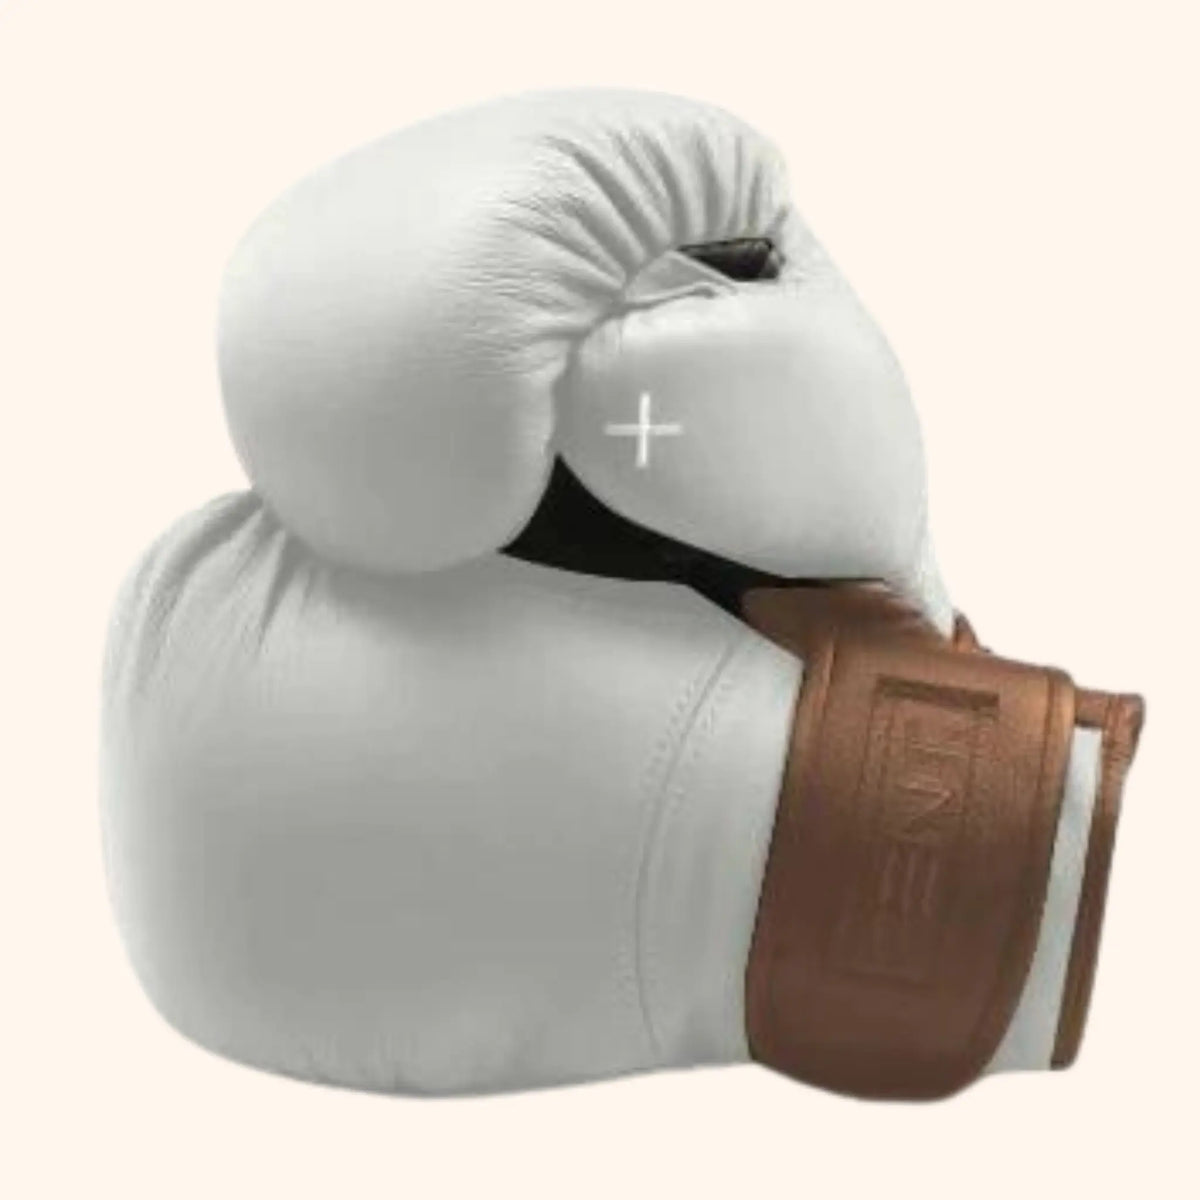 PENT | RAXA Luxury Genuine Leather Boxing Gloves -Medium PENT